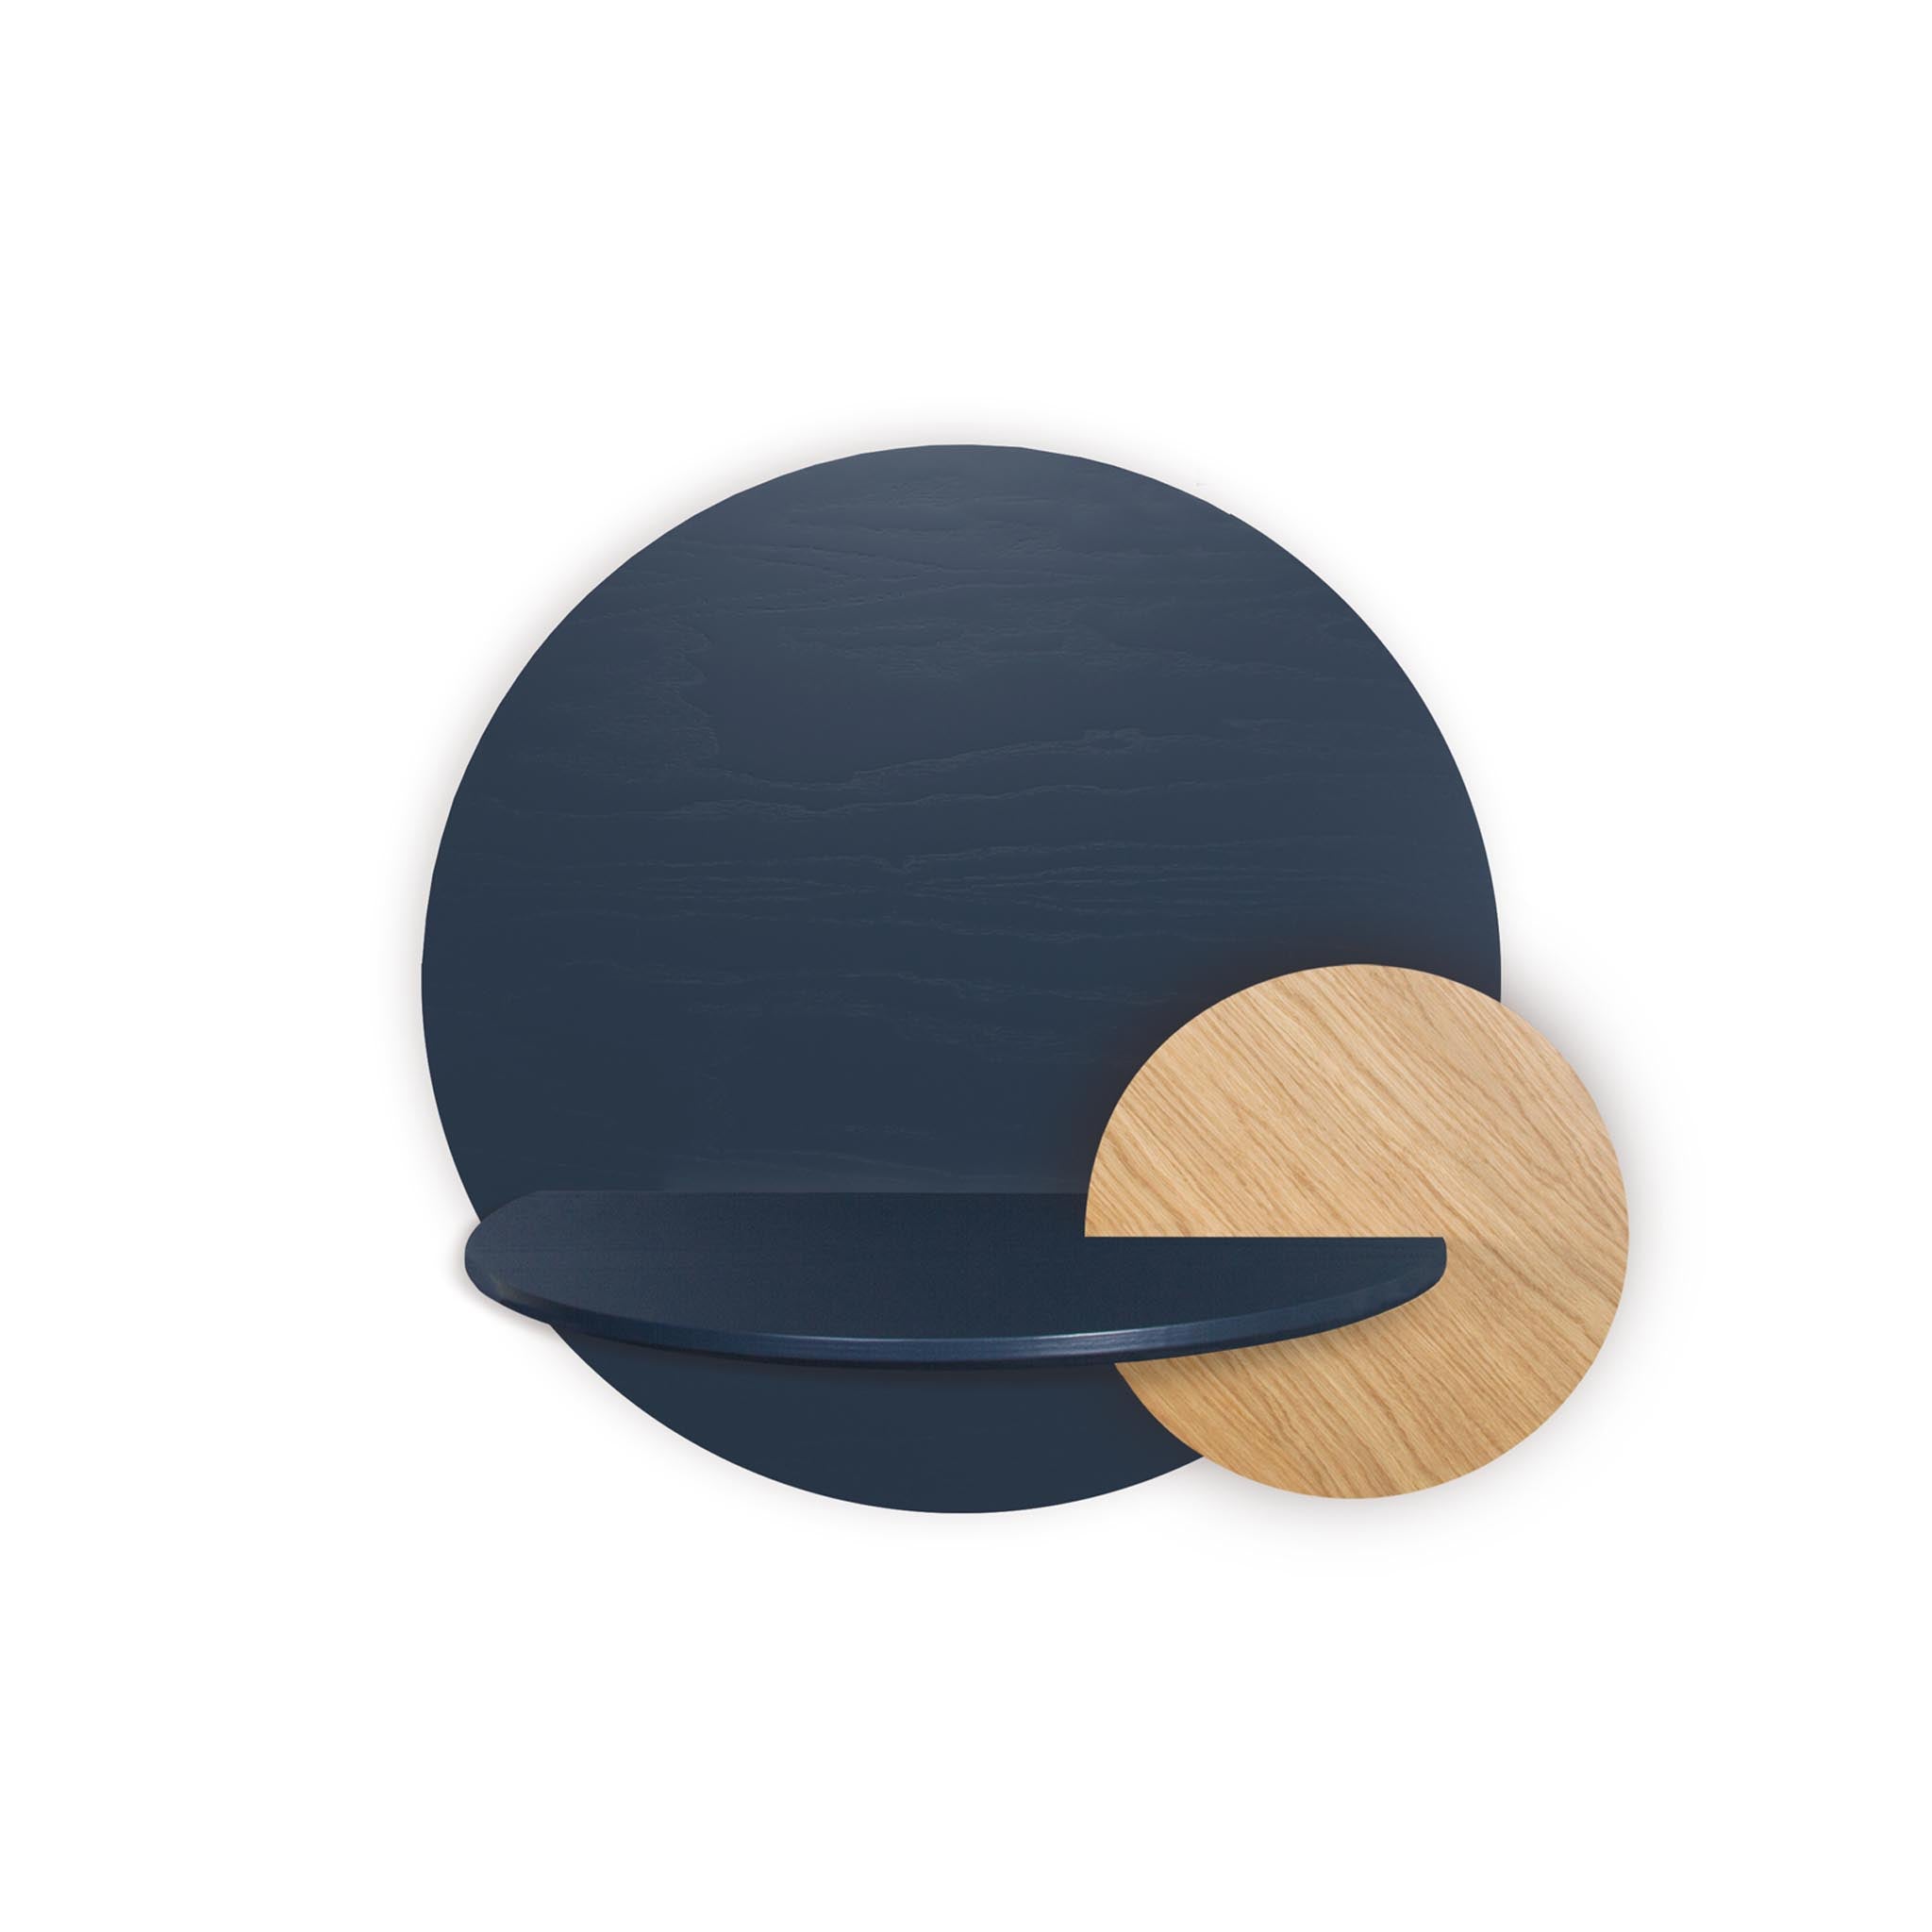 Alba floating nightstand · Blue circle